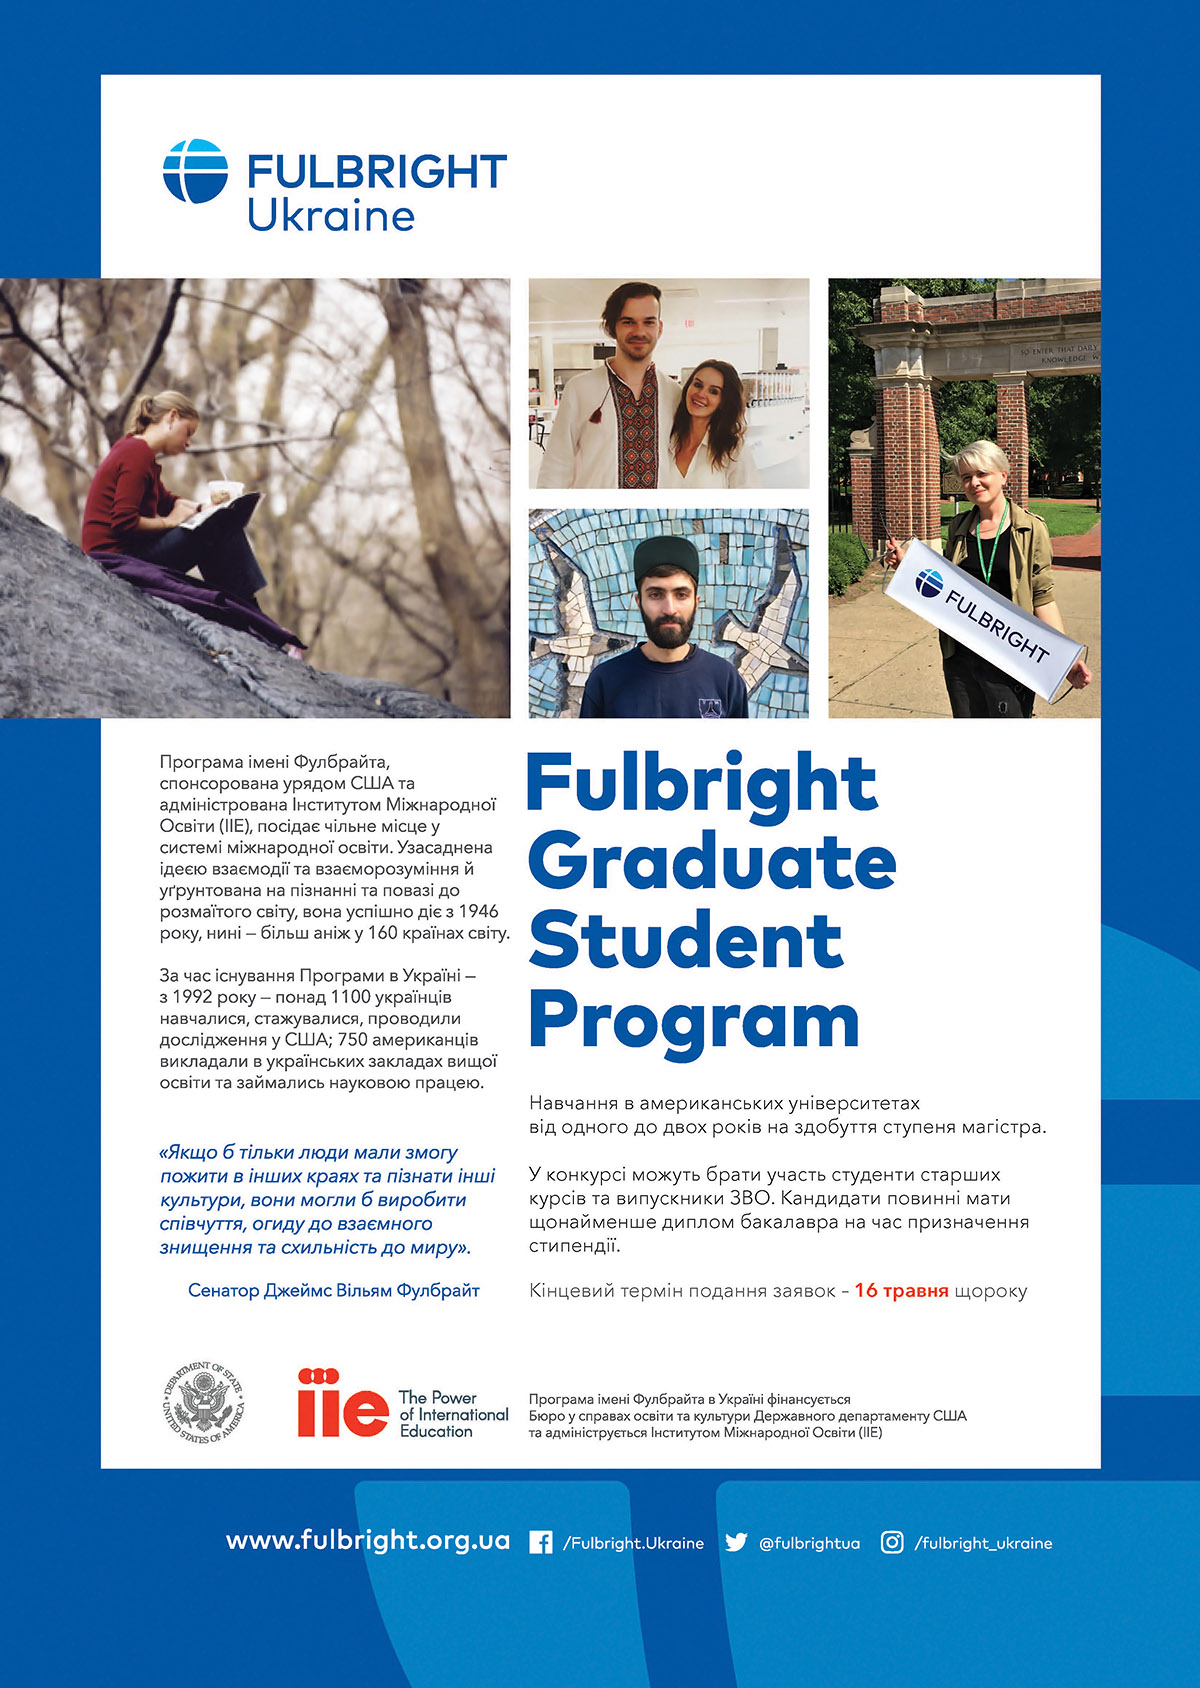 Master's Fulbright Graduate Student Program